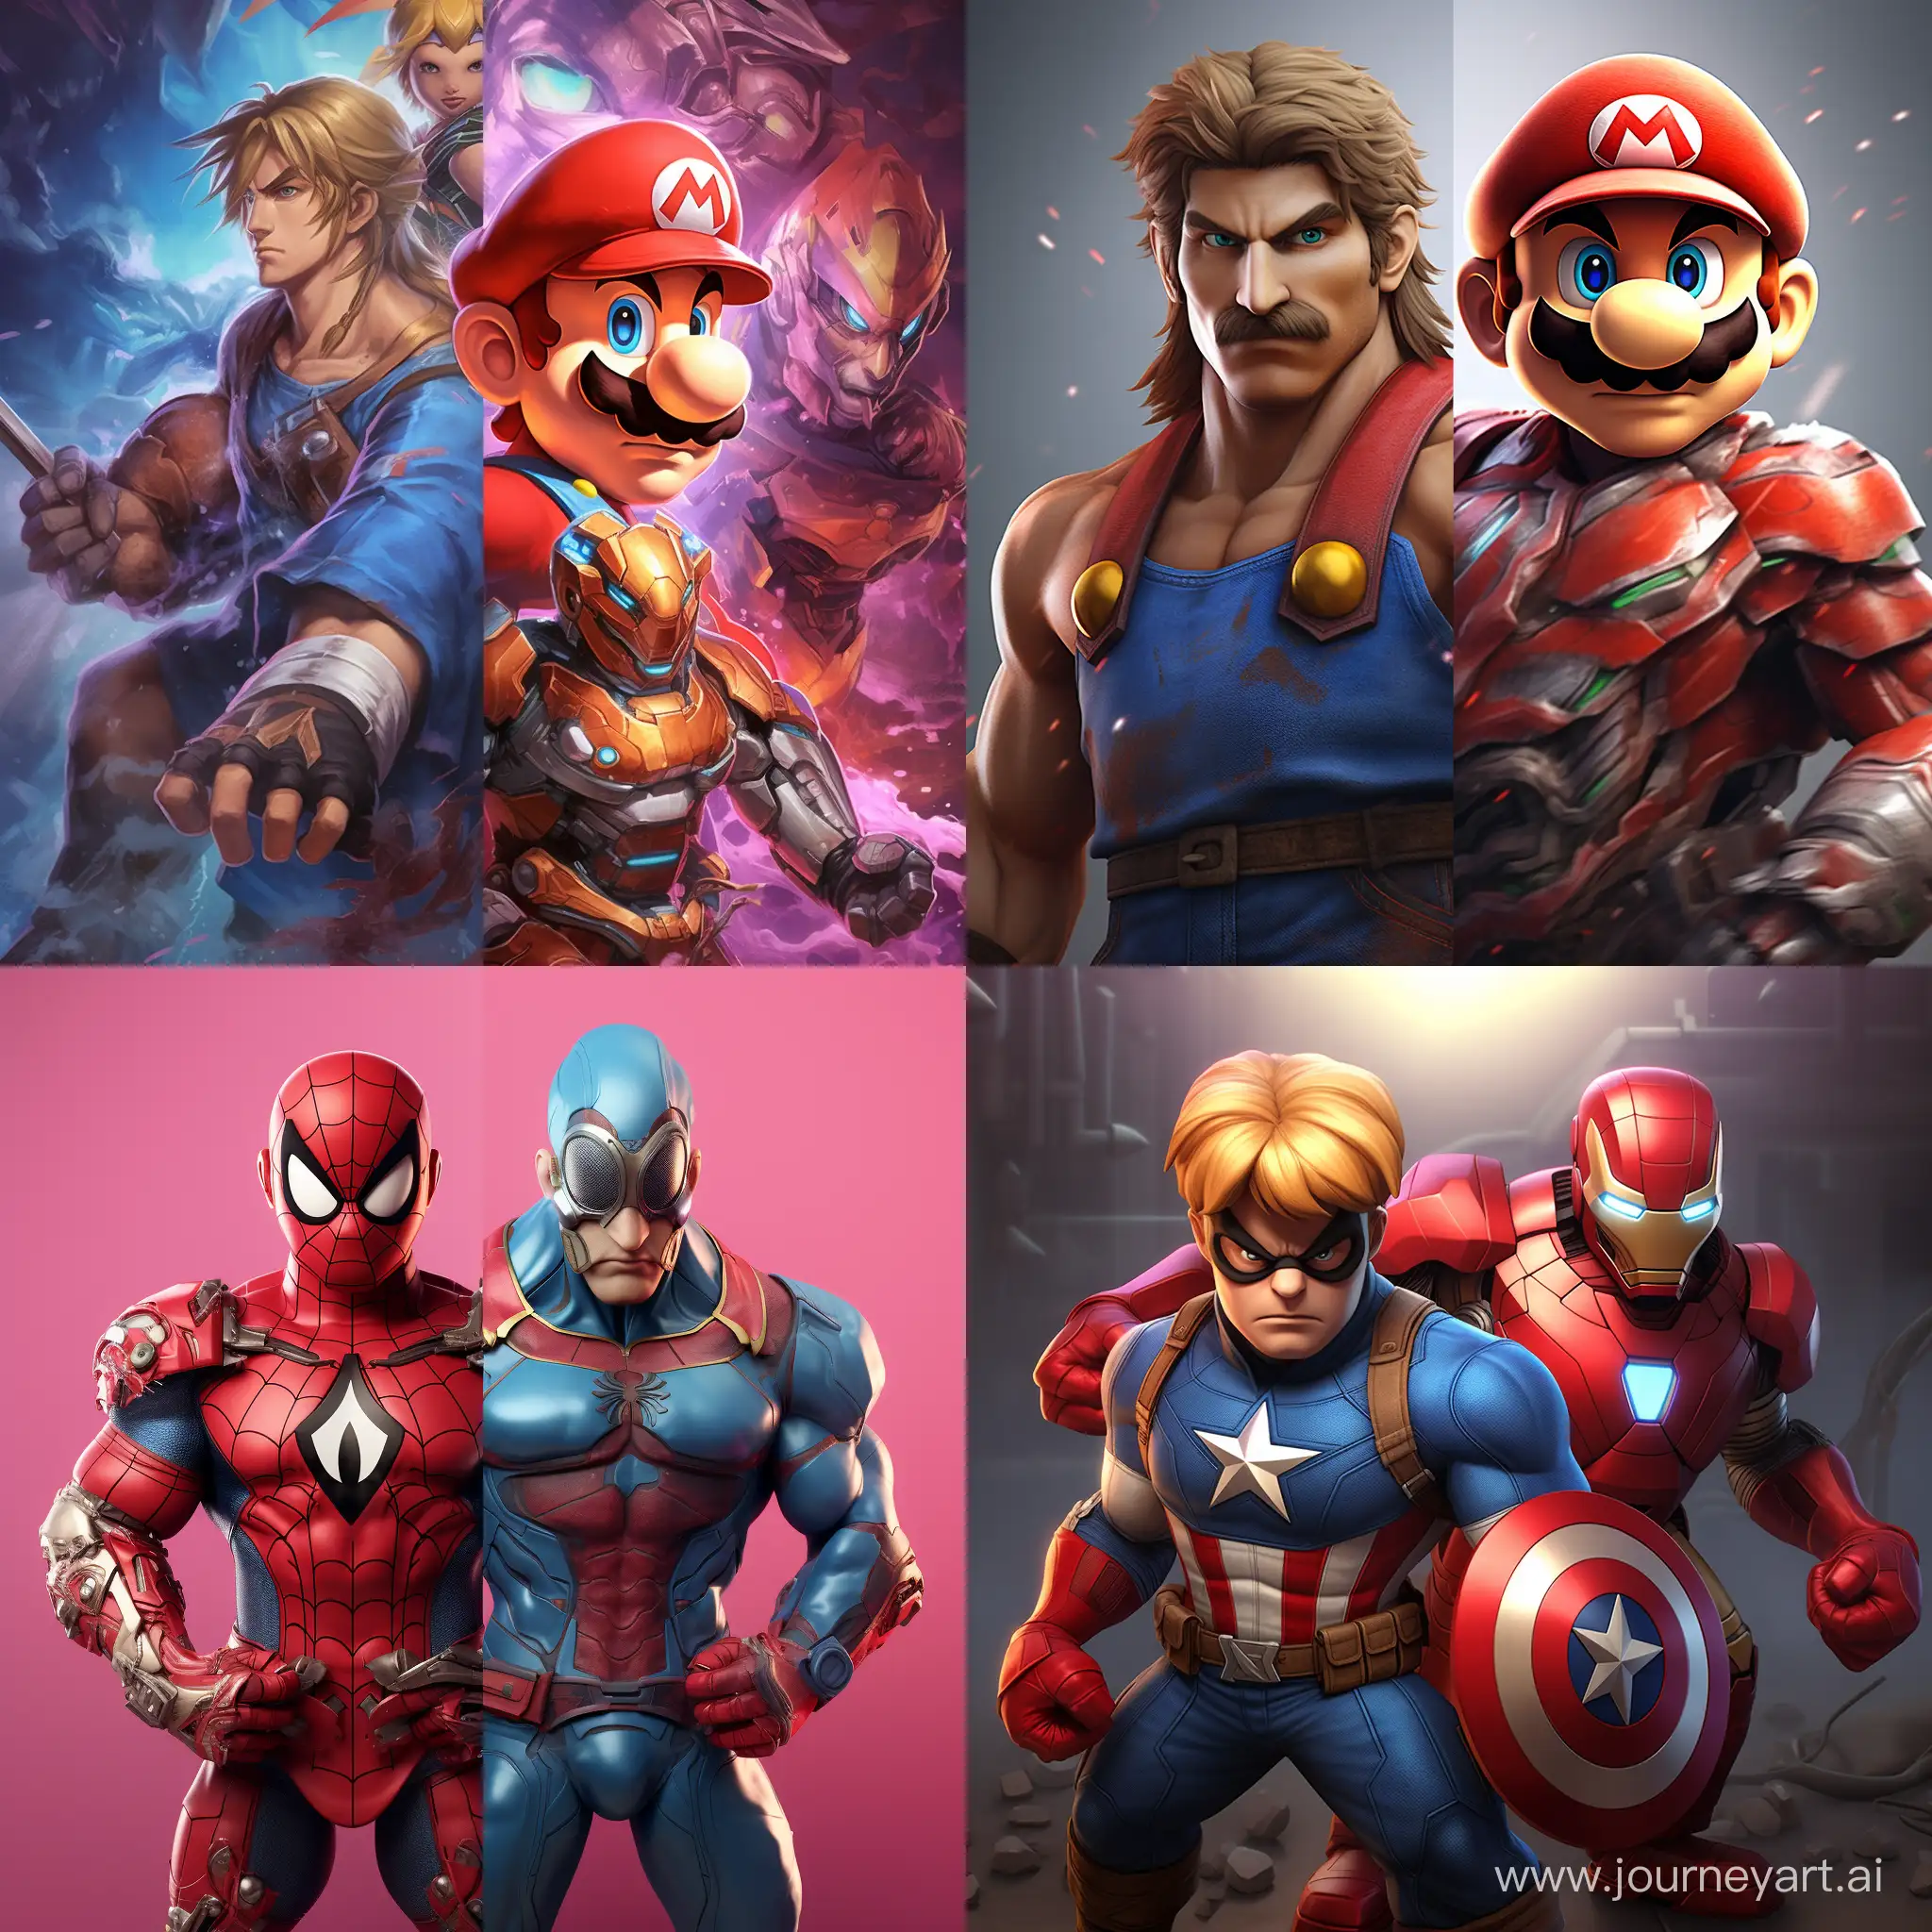 Epic-Showdown-Nintendo-Characters-vs-Marvel-Heroes